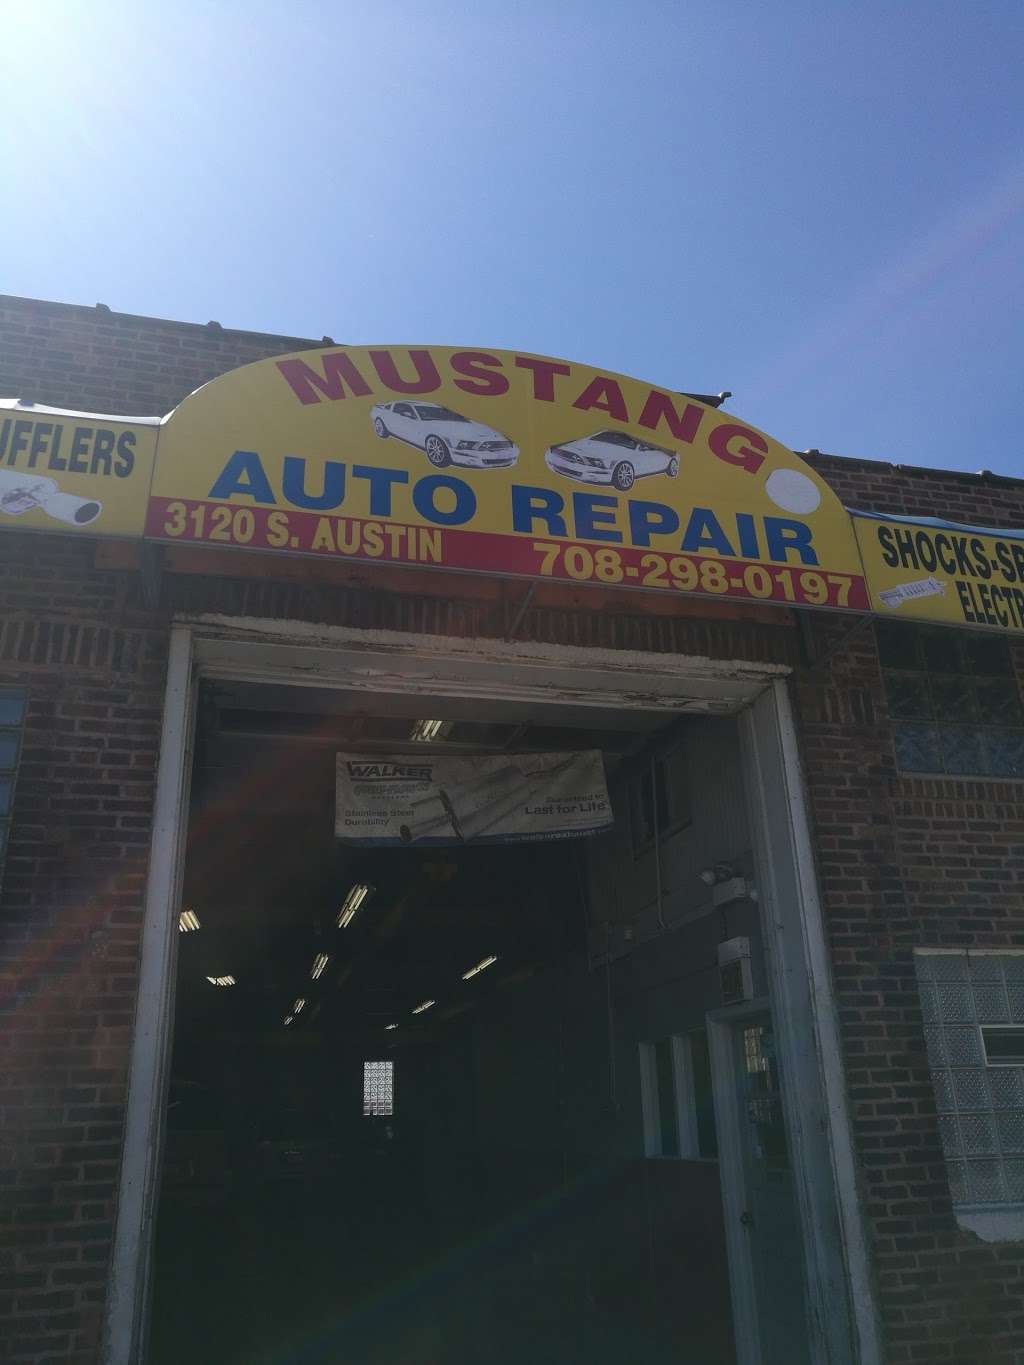 Mustang Auto Repair | 3120 S Austin Blvd, Cicero, IL 60804, USA | Phone: (708) 298-0197